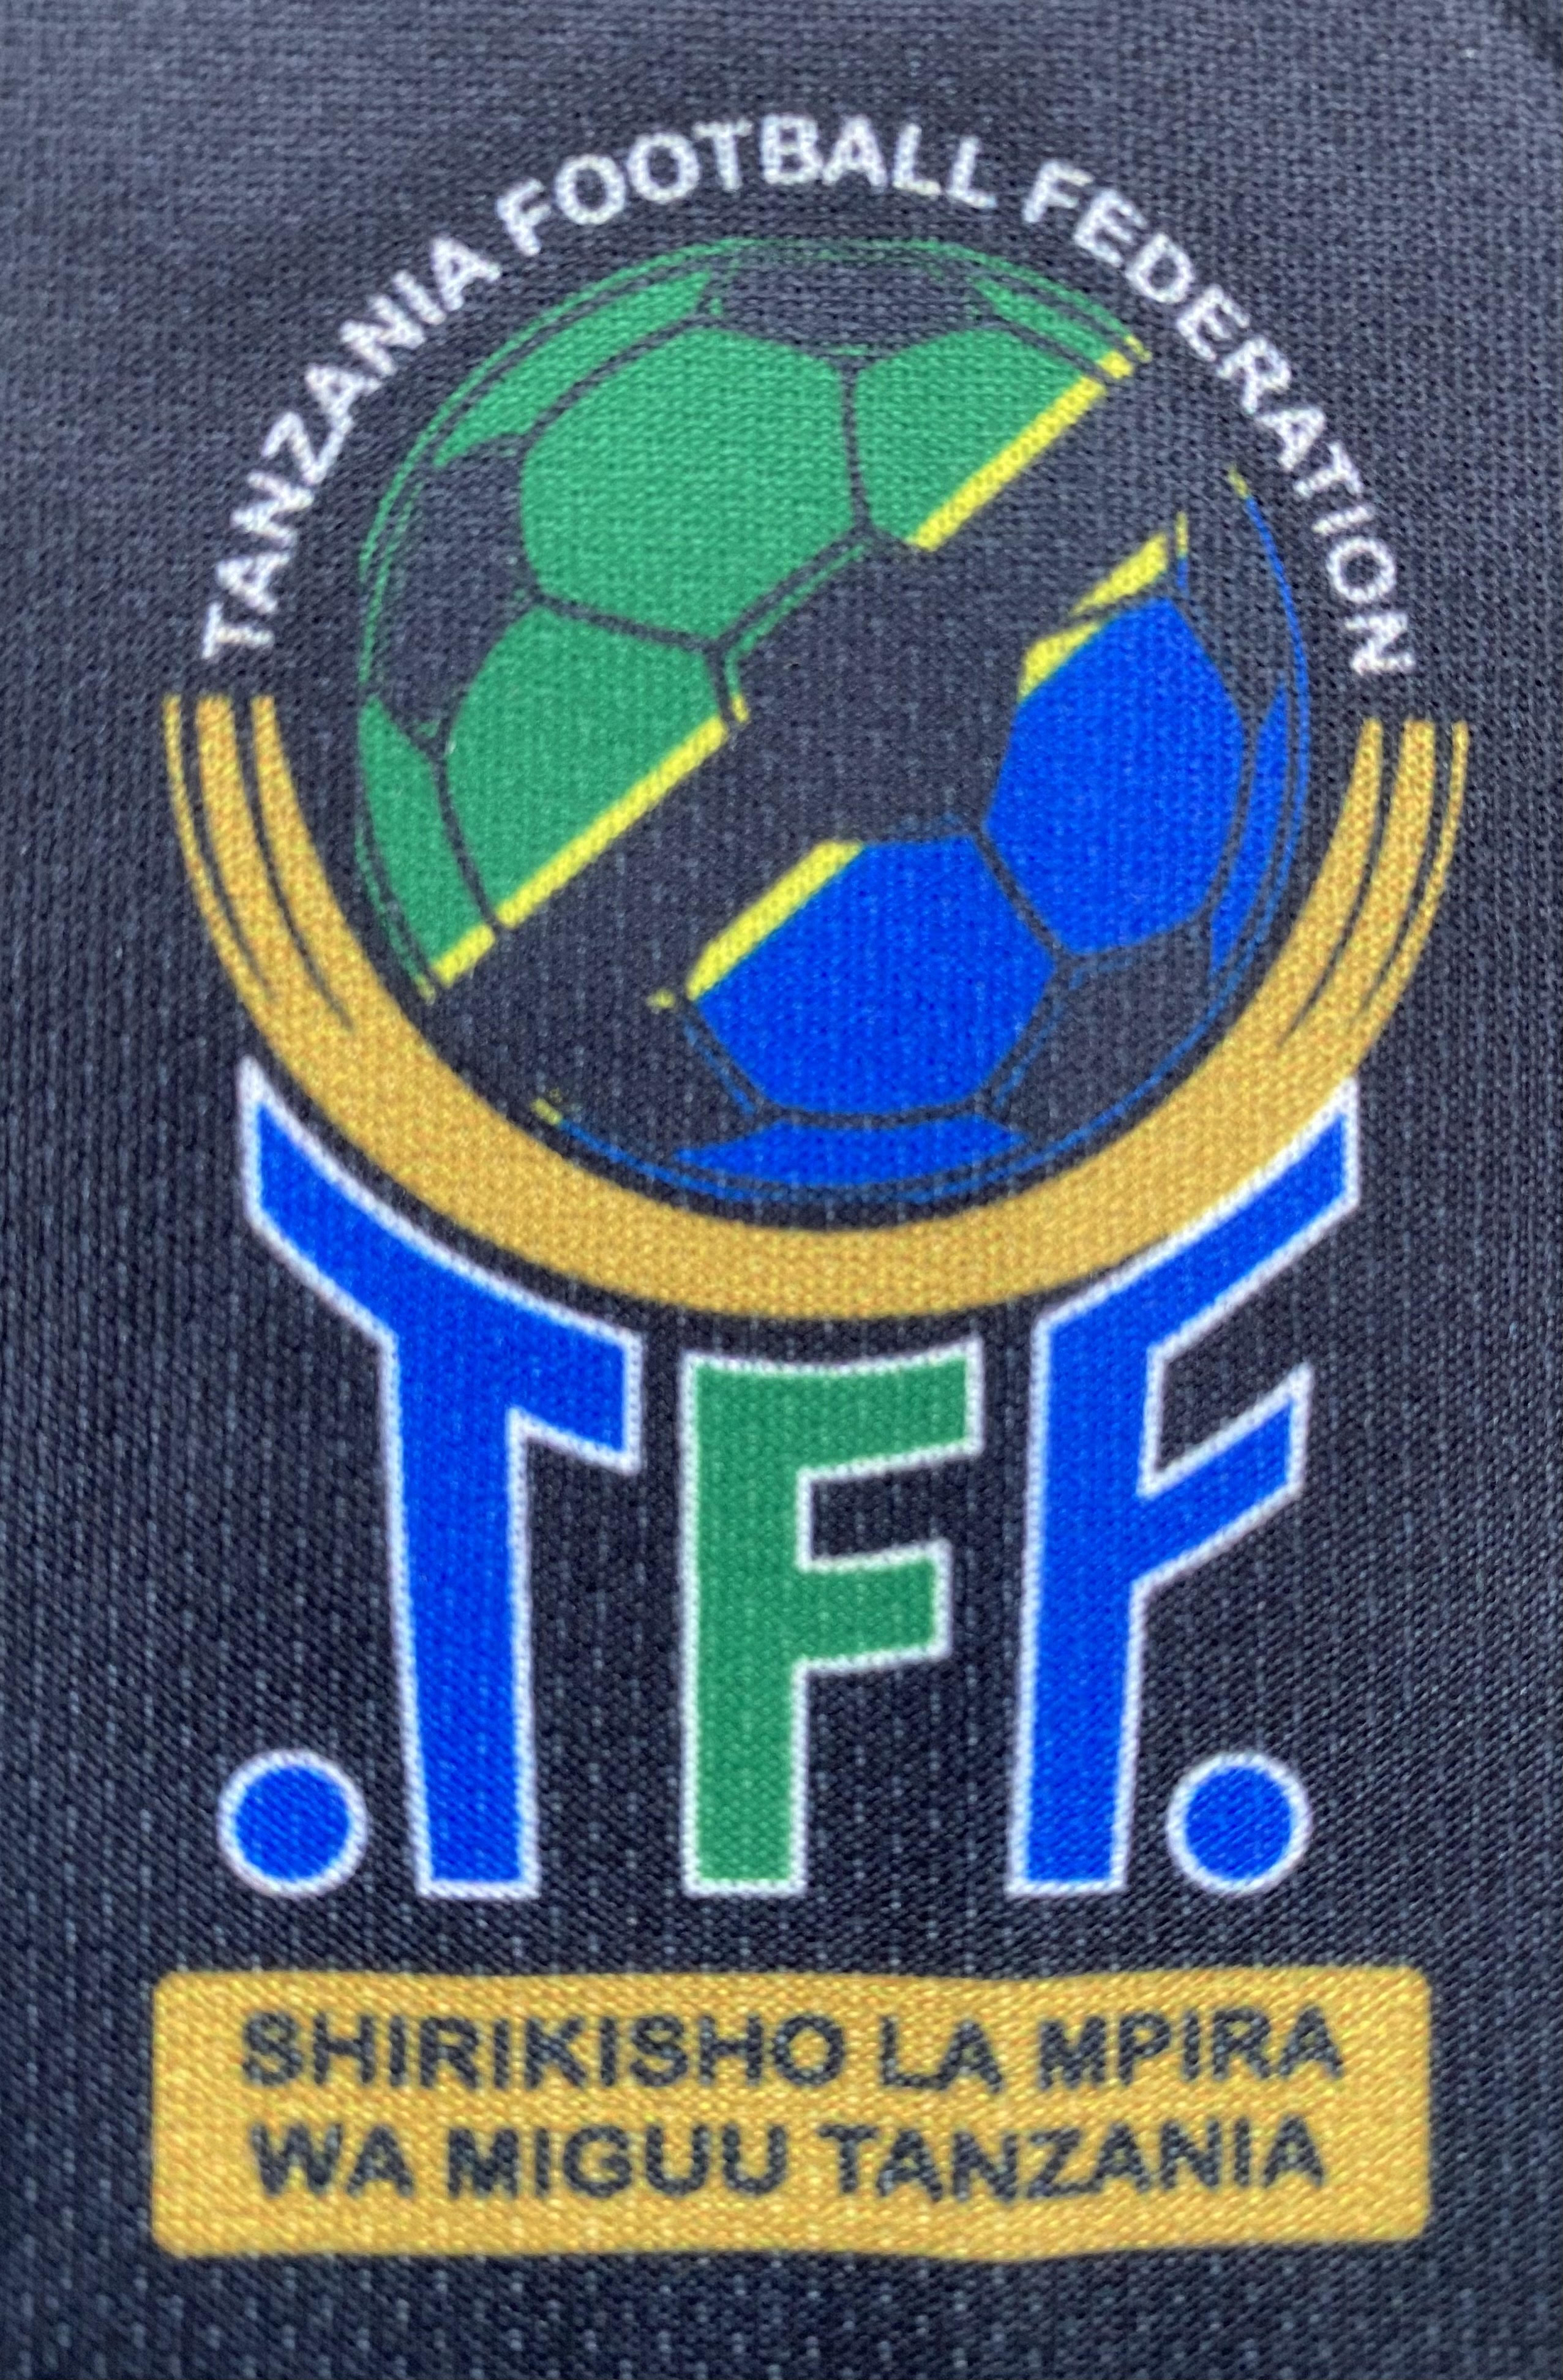 Tanzania | Best of Football Shirts